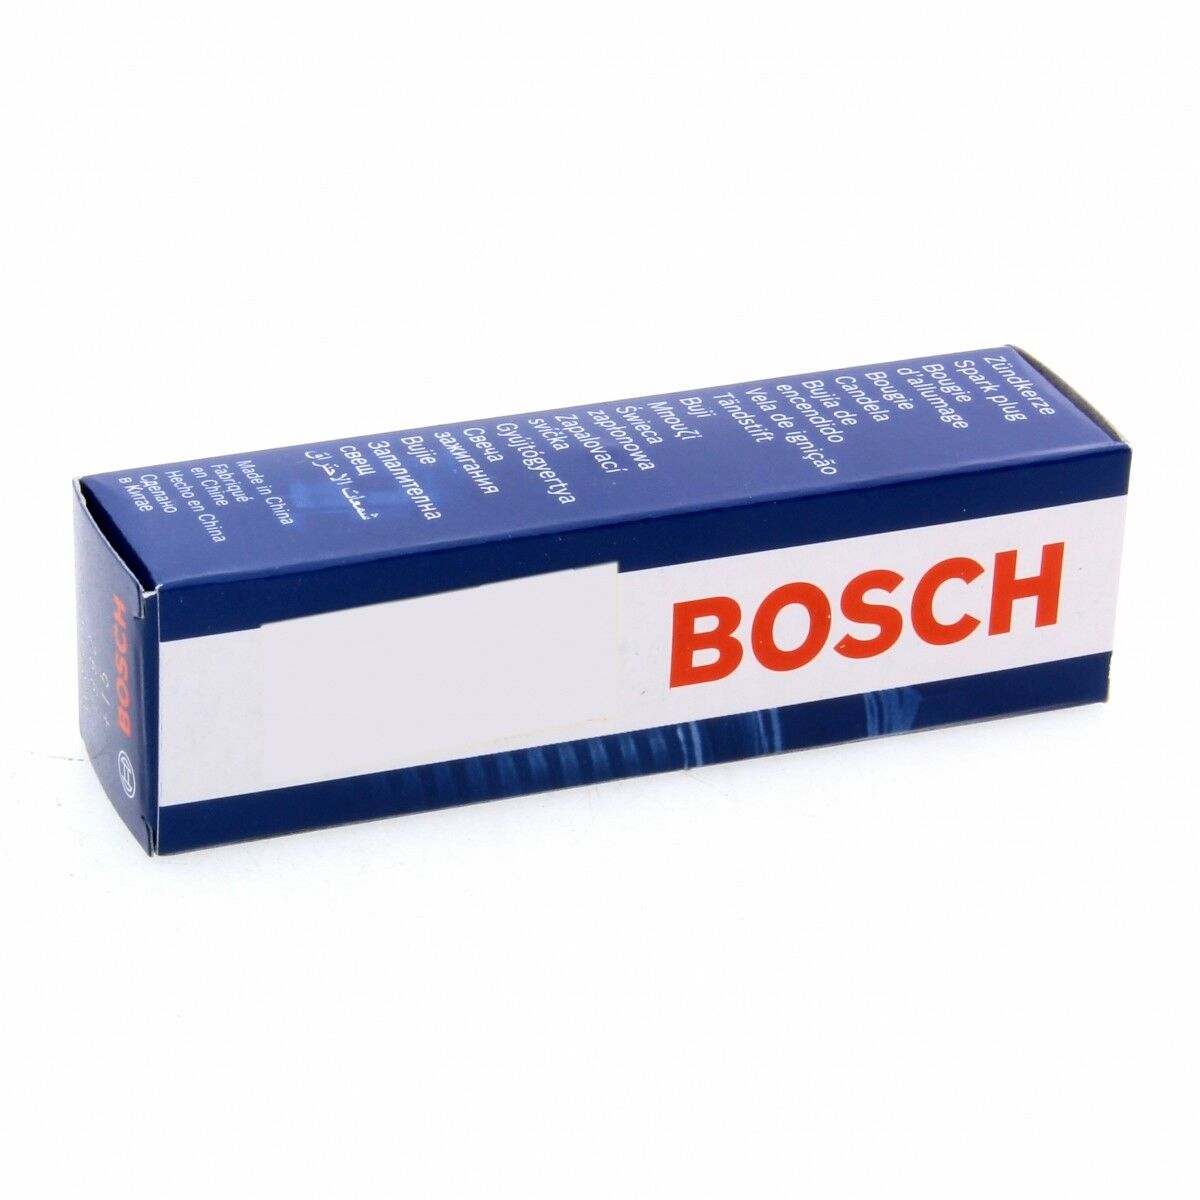 1x Bosch 0242245552 Zündkerze Audi Jaguar Mercedes Benz Porsche Renault Volvo VW